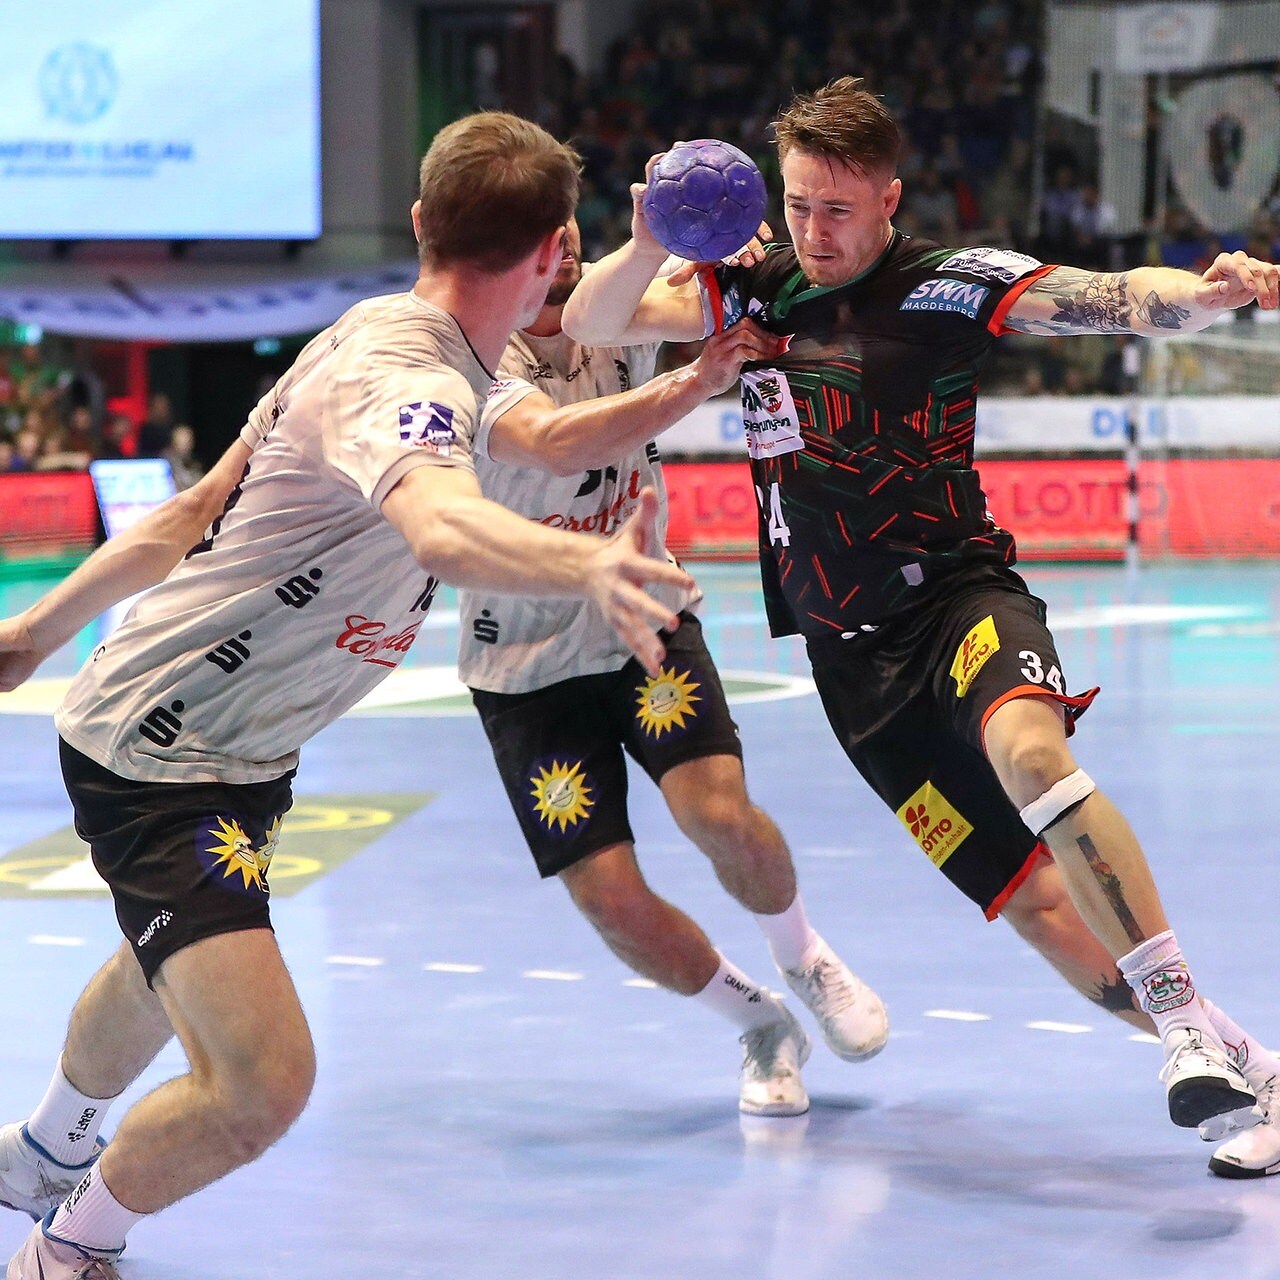 Handball Magdeburger Kantersieg macht Lust auf Klub-WM MDR.DE